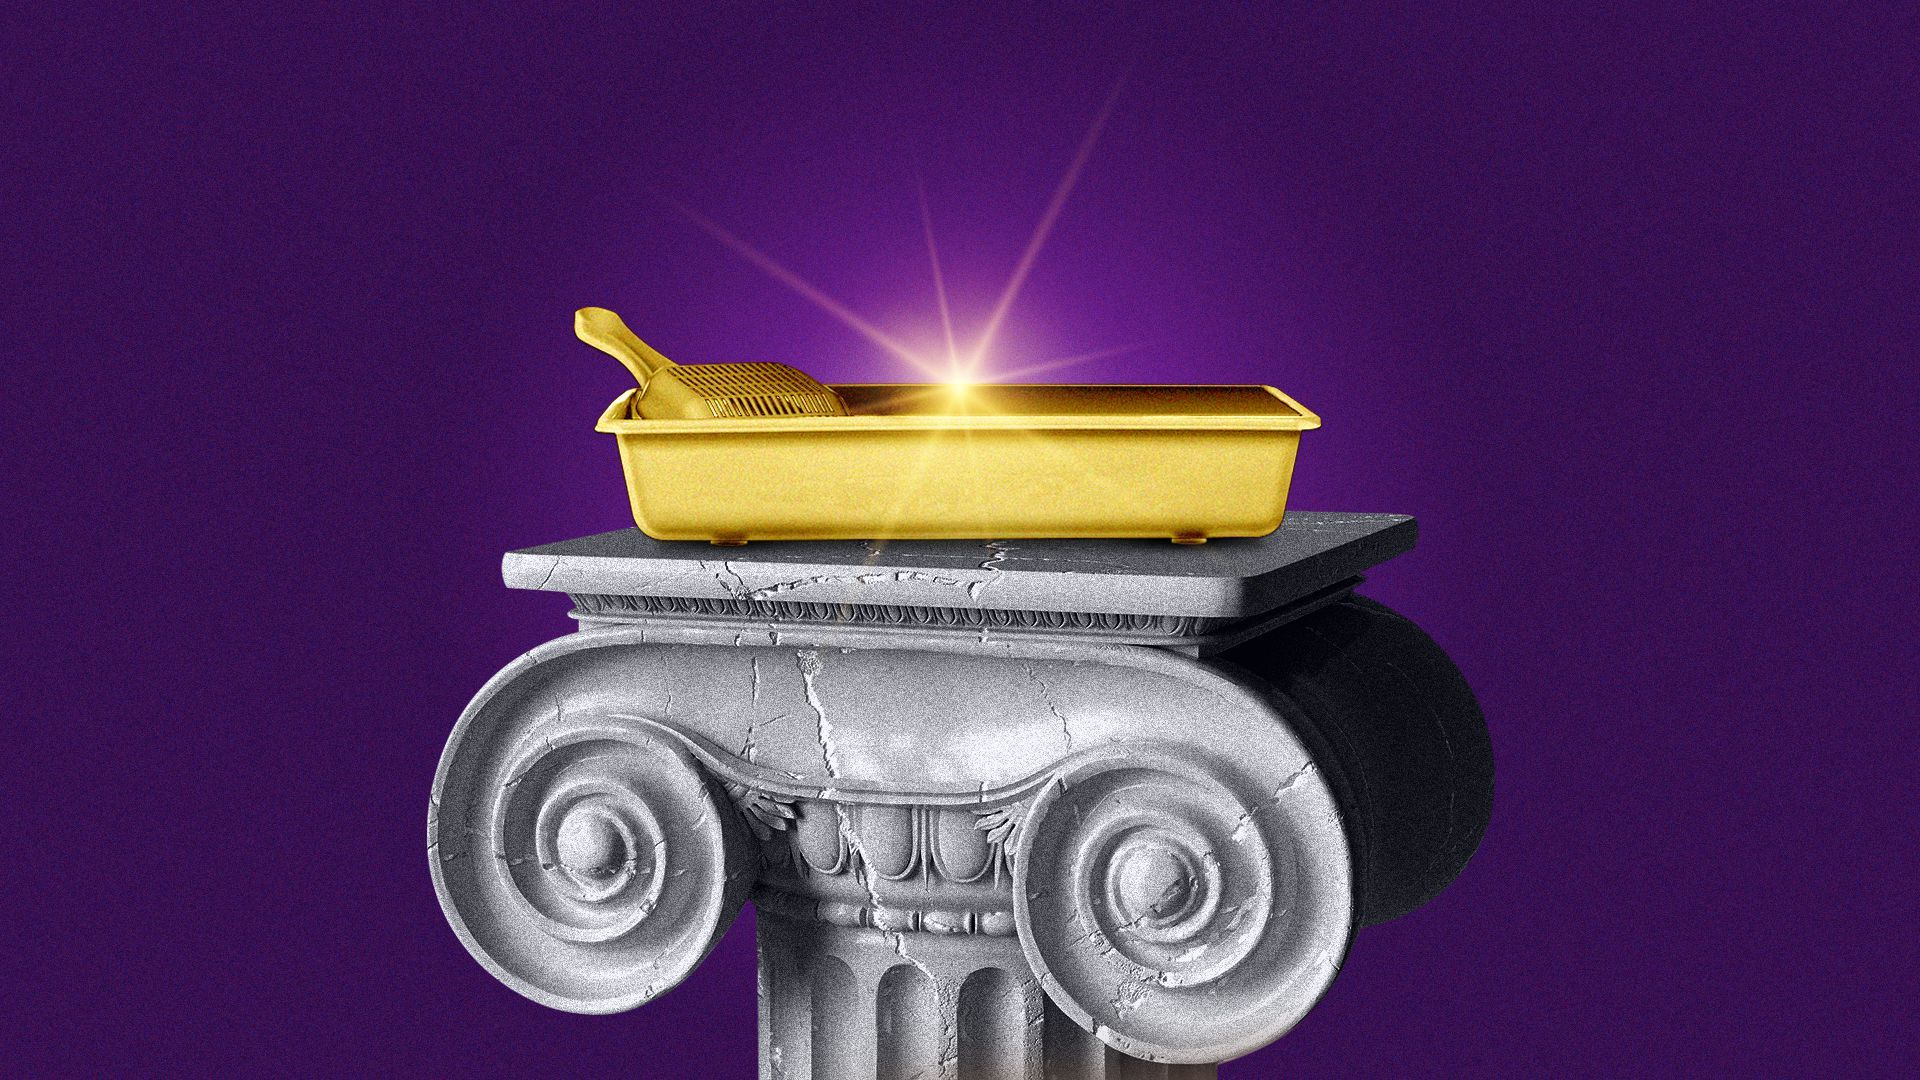 Illustration of a golden litter box on top of a pedestal.